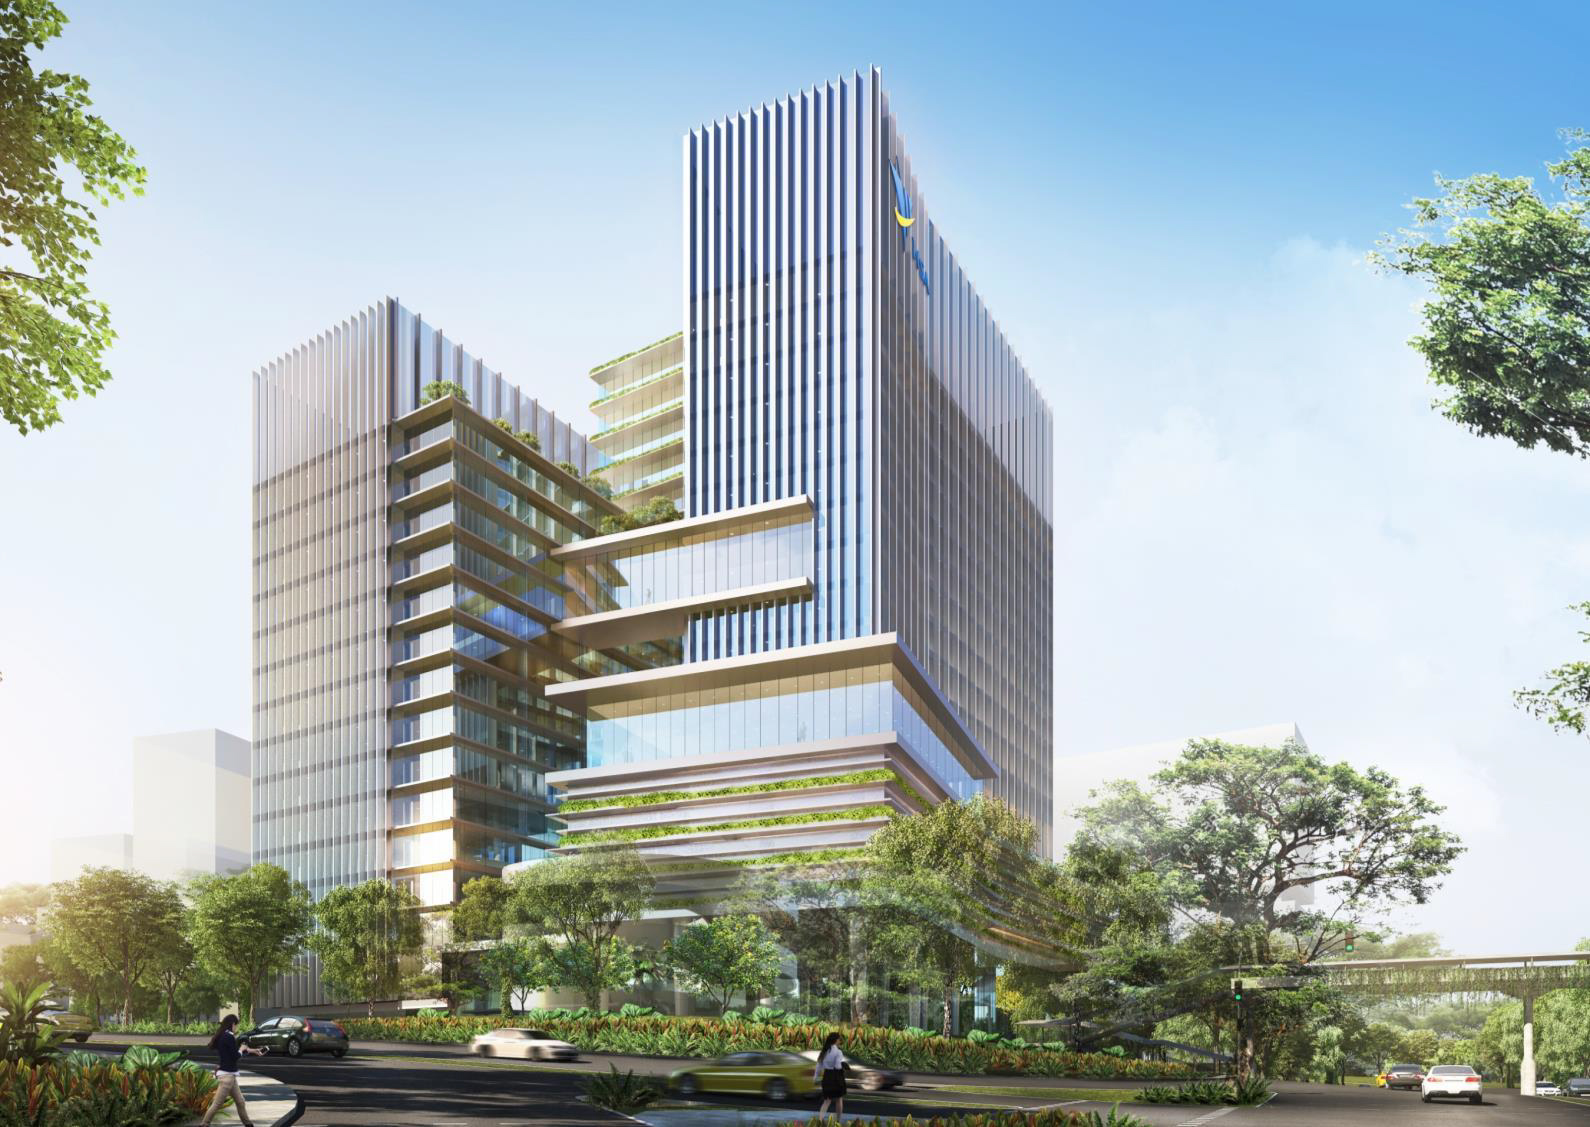 Singapore Health Sciences Authority Building